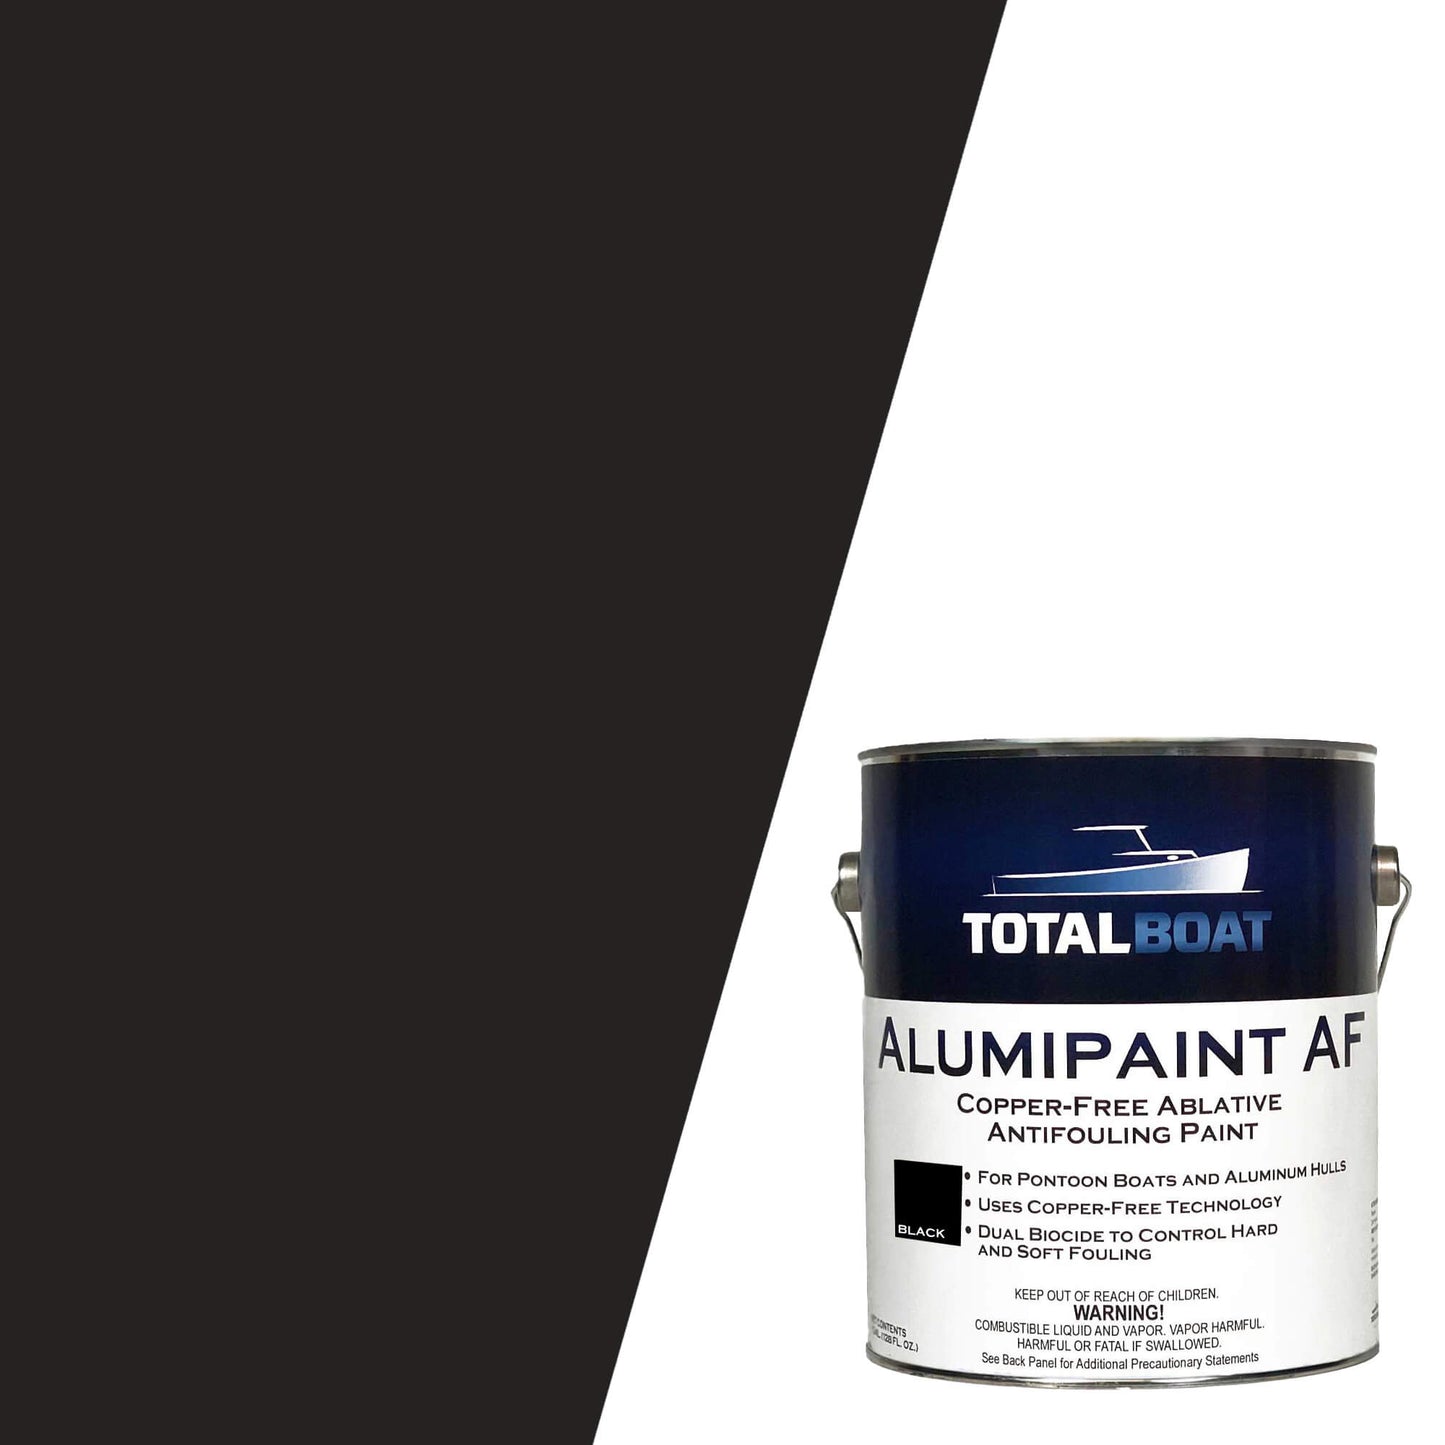 TotalBoat AlumiPaint AF Aluminum Antifouling Paint Black